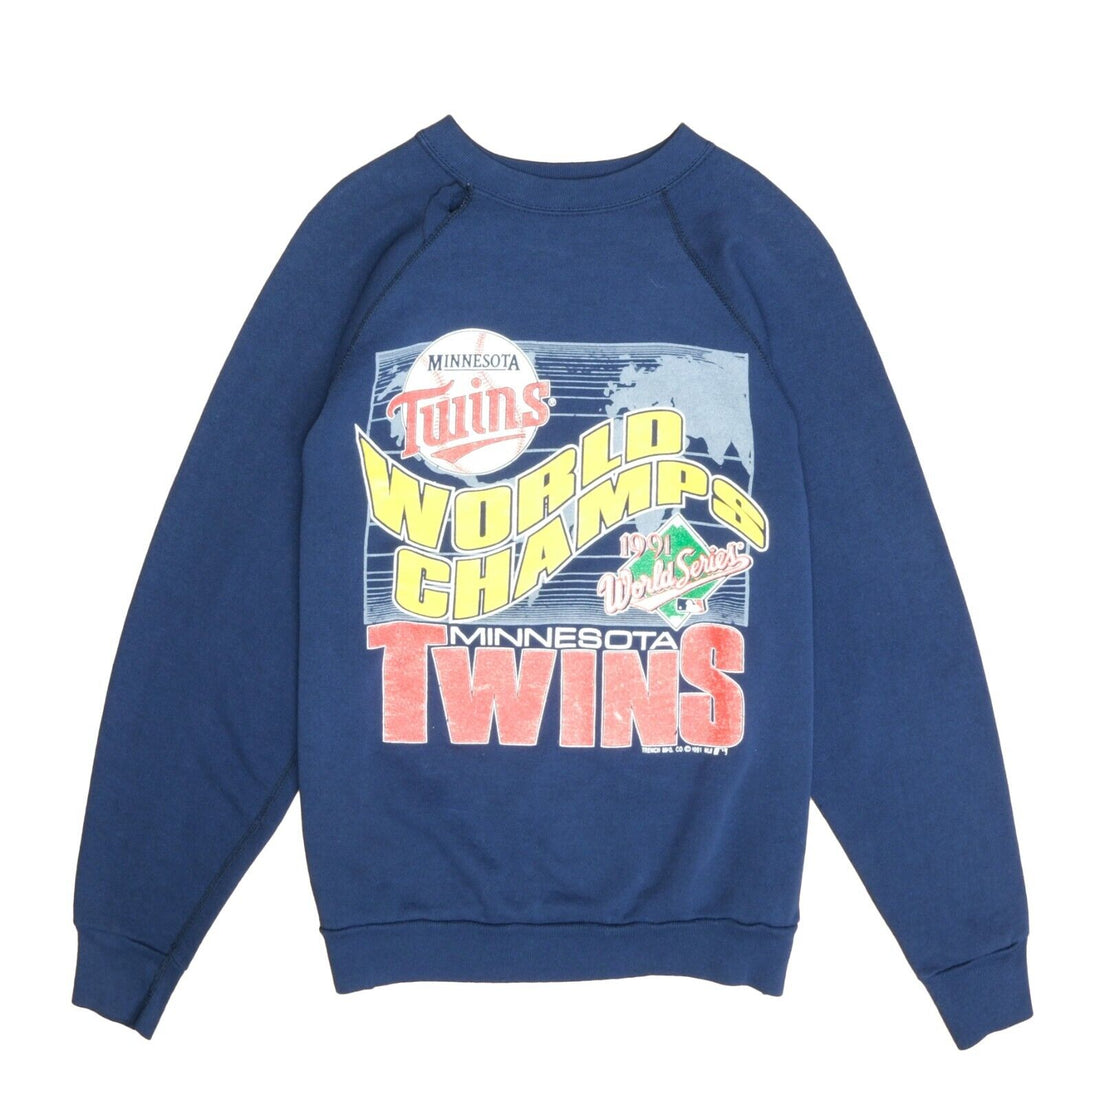 Vintage Minnesota Twins World Series Champs Sweatshirt Size Medium 1991 90s MLB